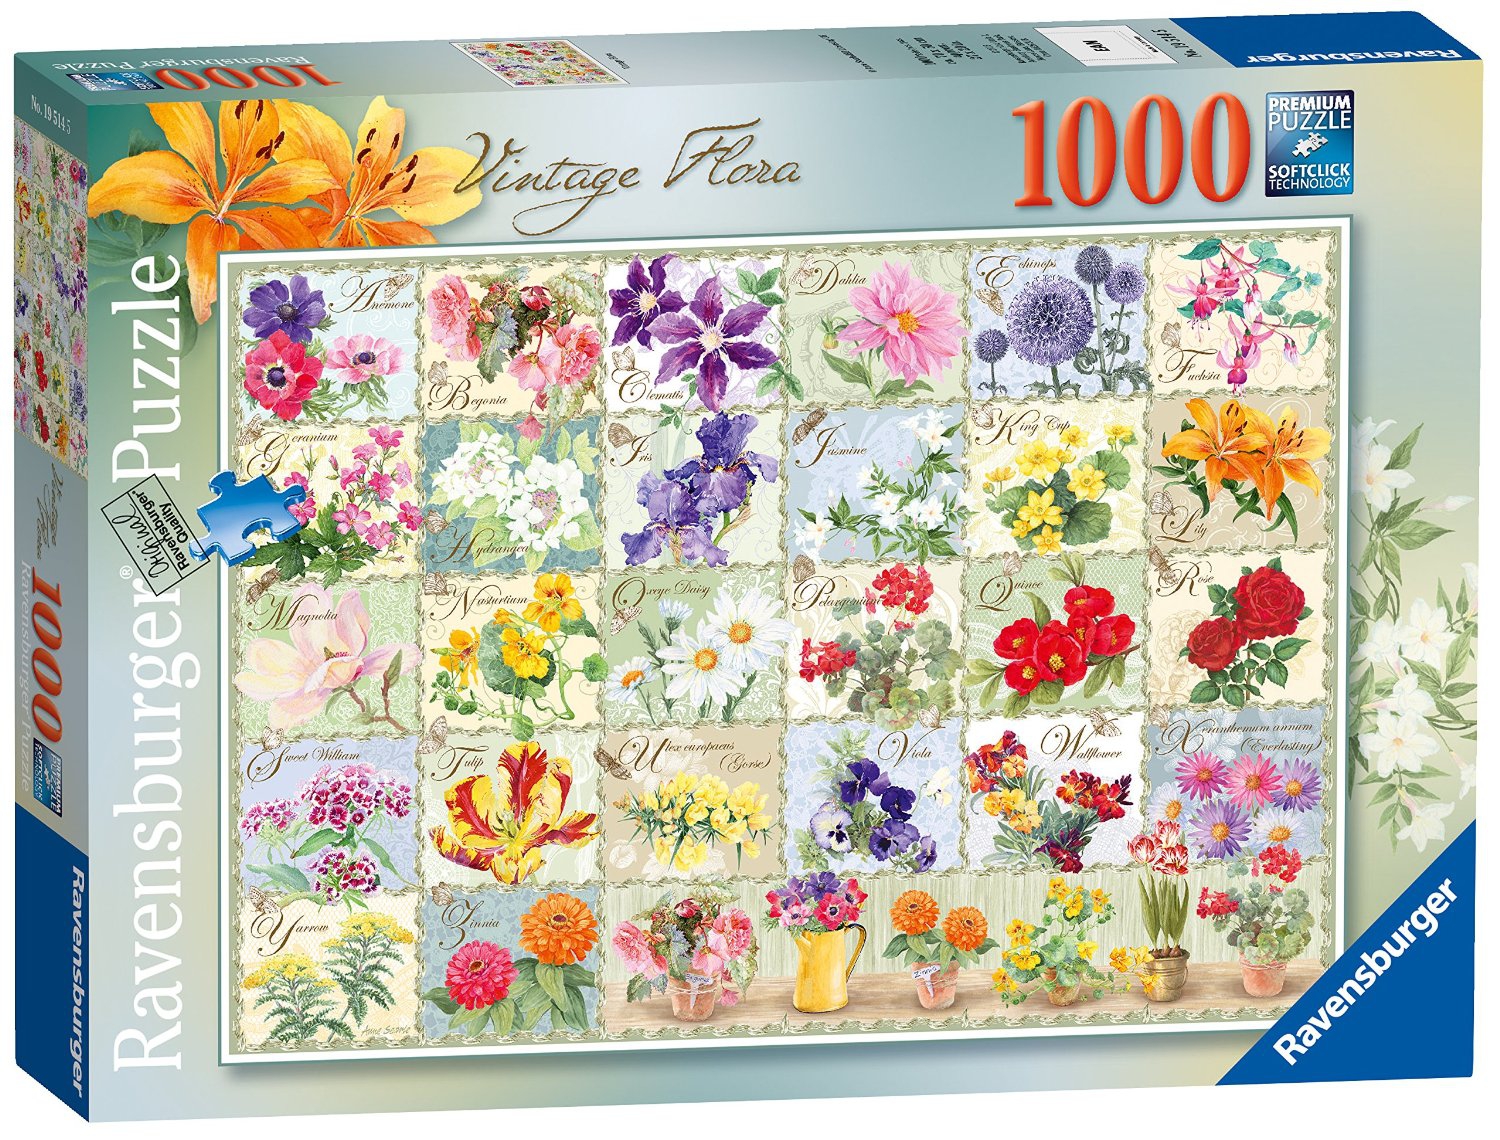 Ravensburger Vintage Flora 1000 Piece Jigsaw Puzzle Game